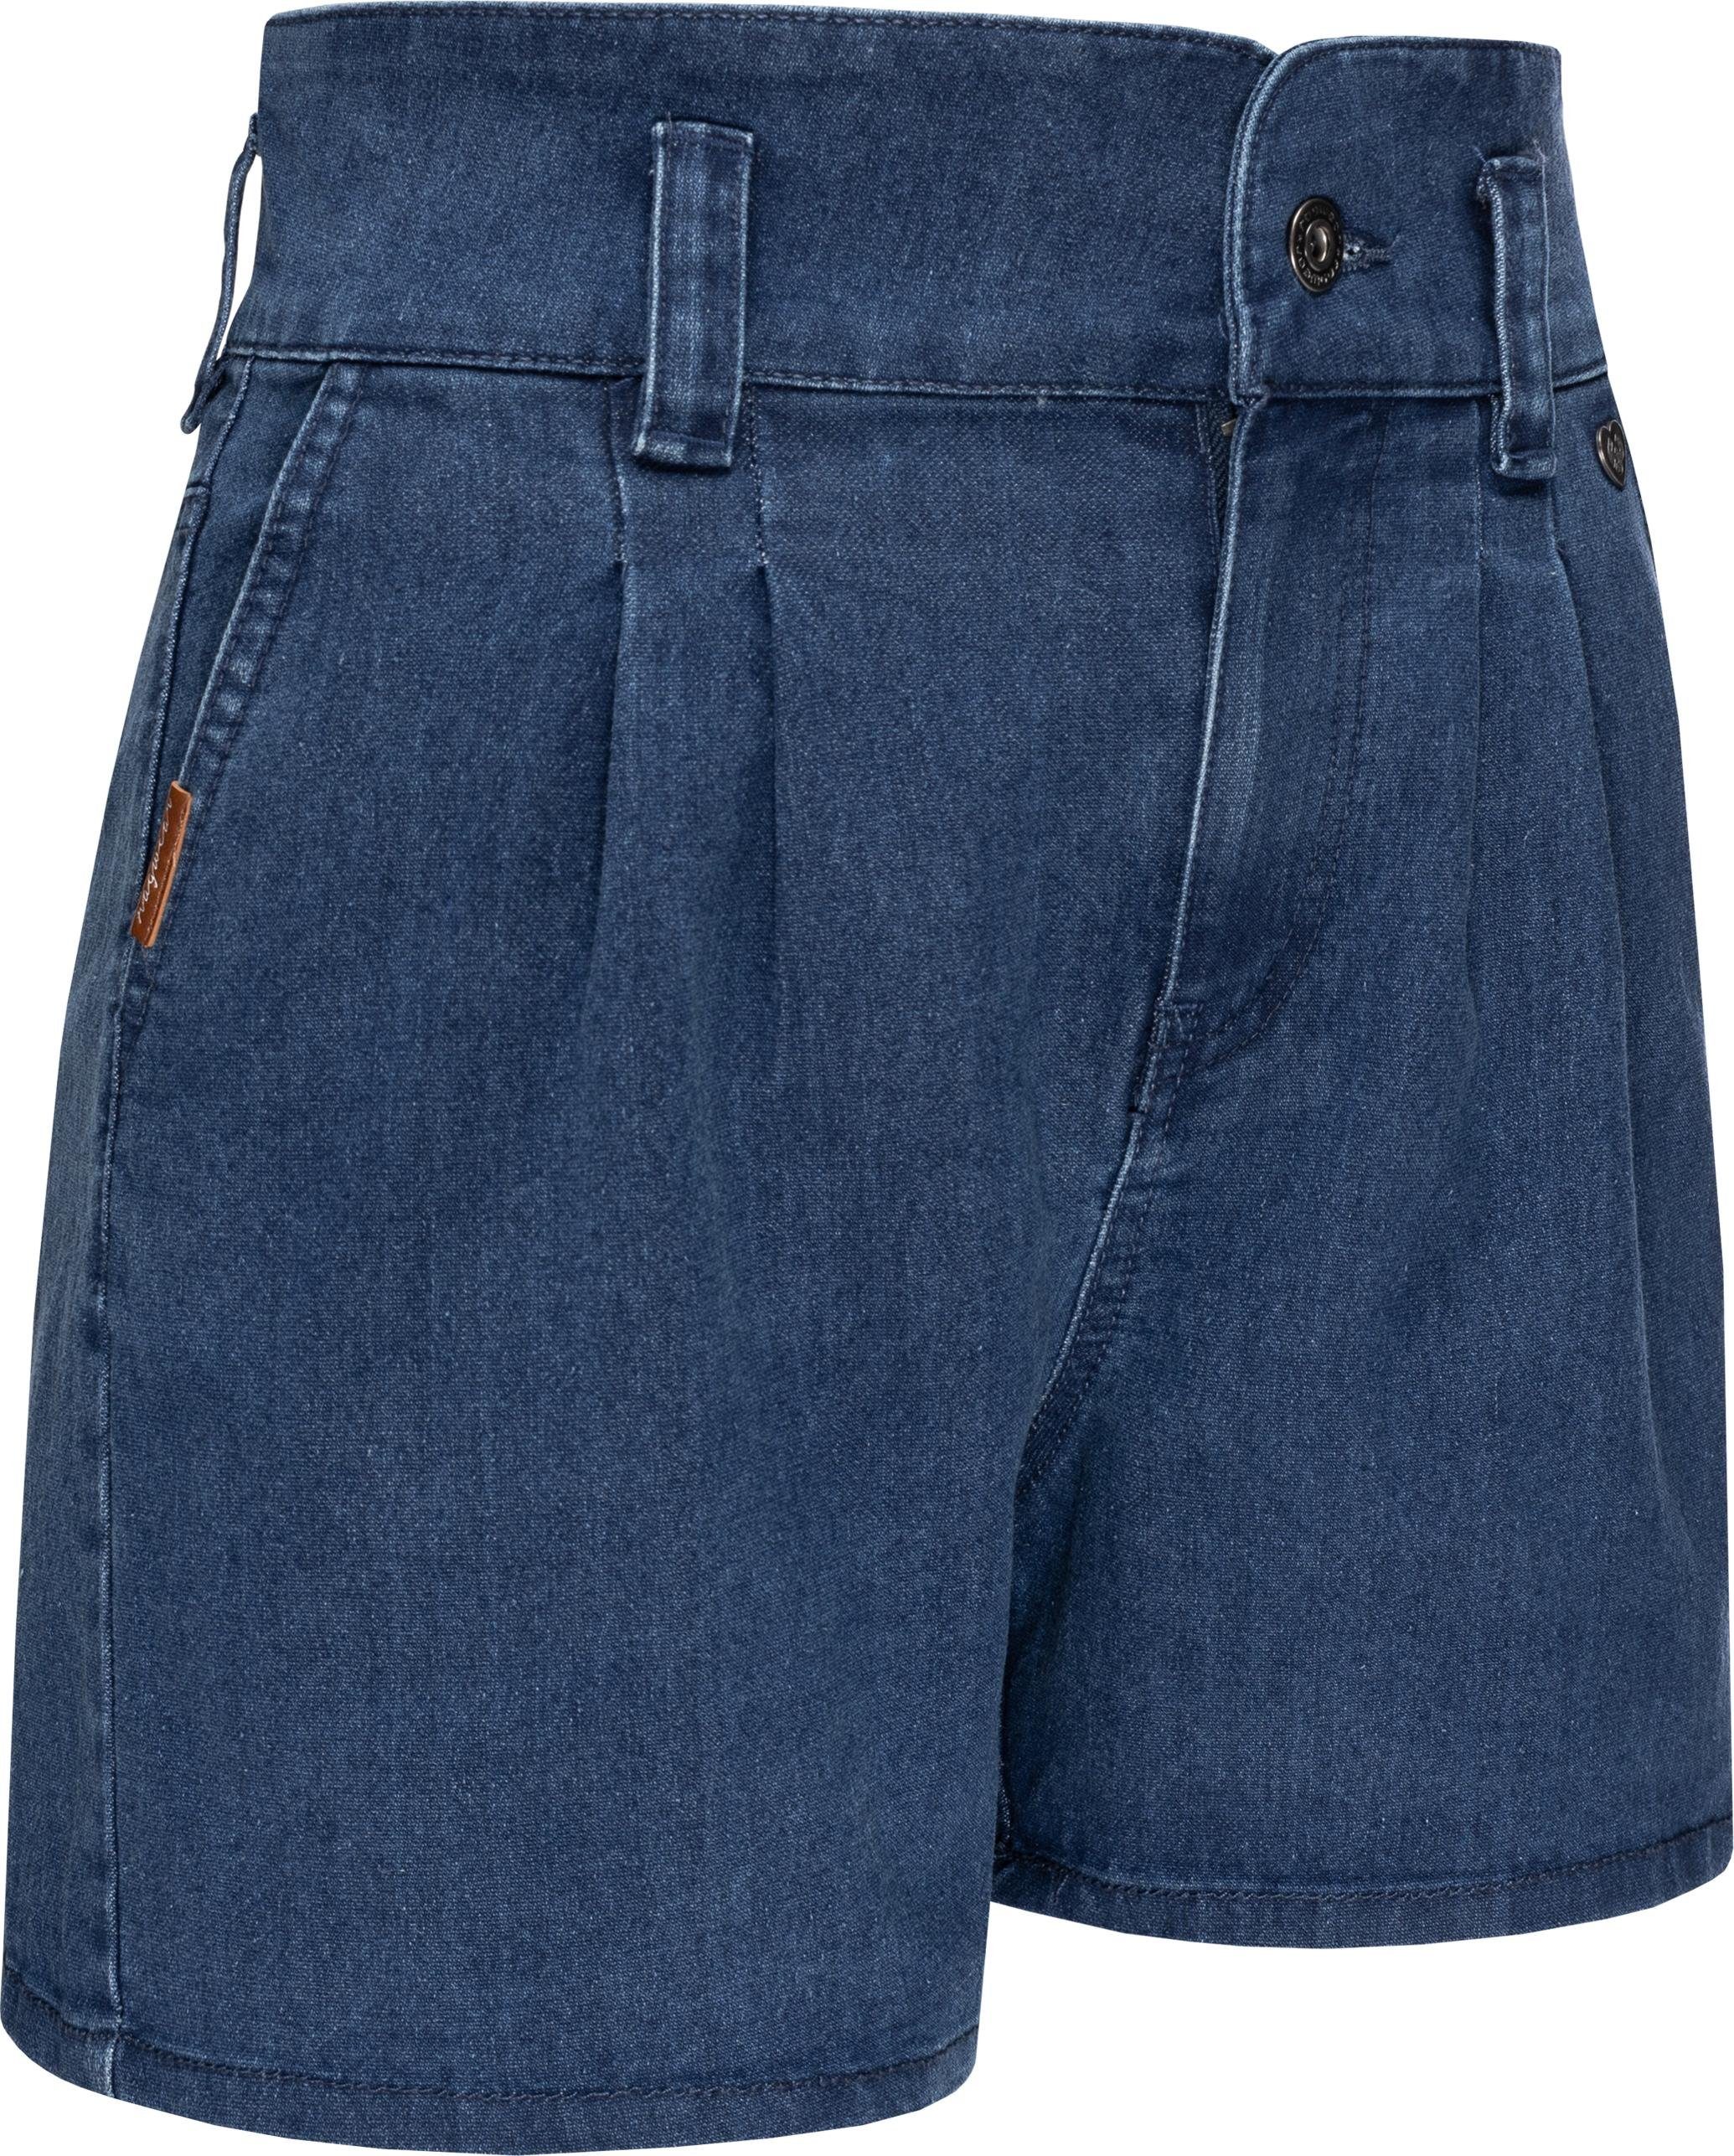 Ragwear Shorts Suzzie stylische, in kurze Sommerhose Jeansoptik indigo